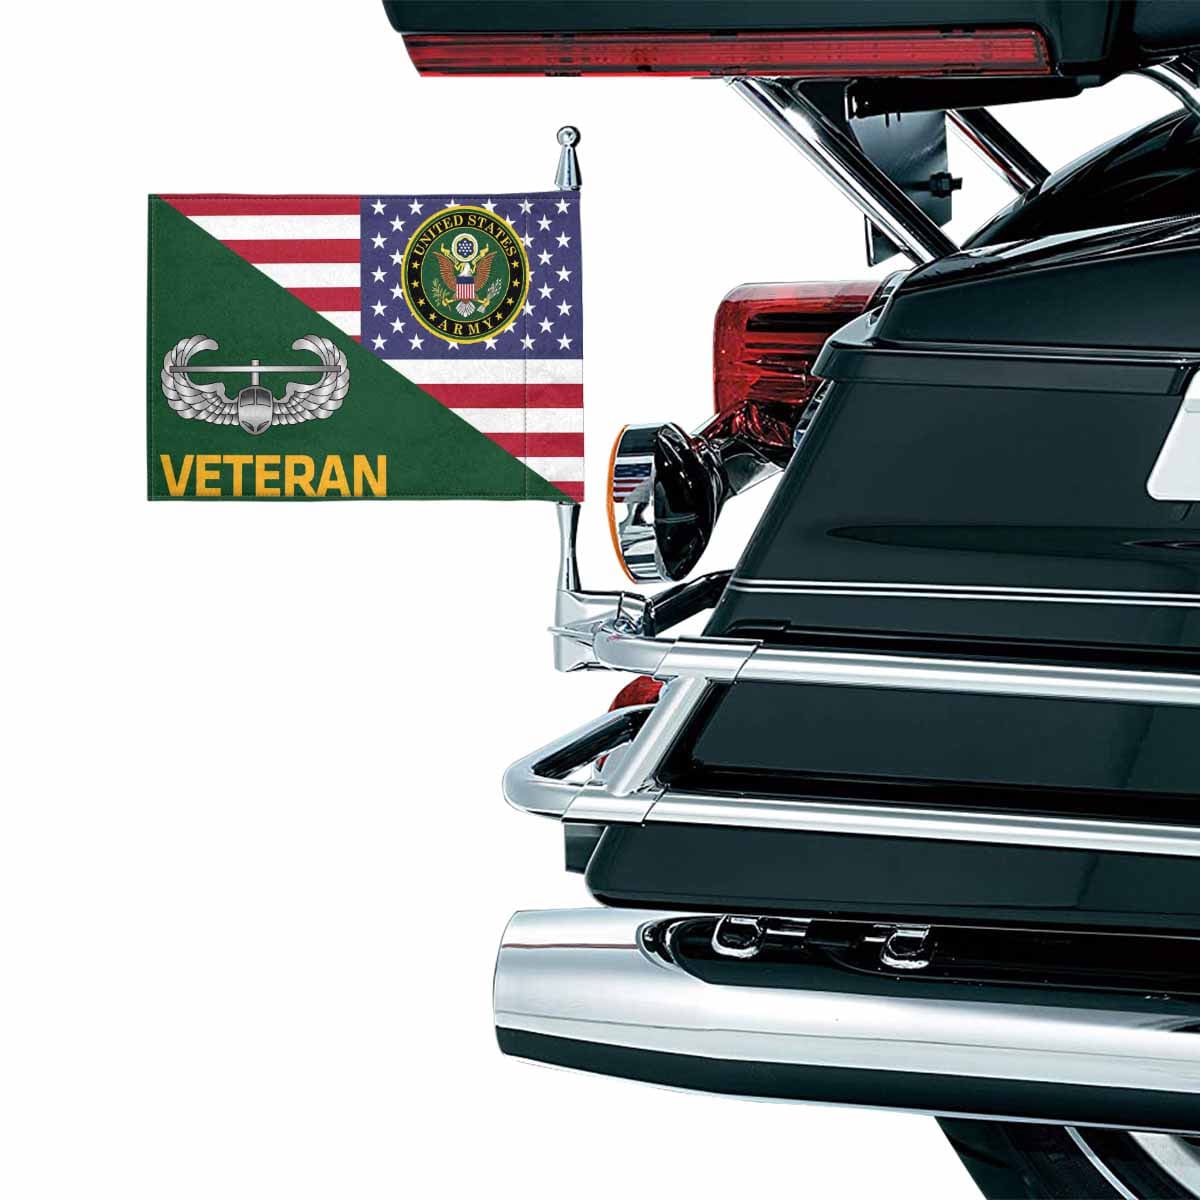 US Army Air Assault Wings Badge Veteran Motorcycle Flag 9" x 6" Twin-Side Printing D01-MotorcycleFlag-Army-Veterans Nation